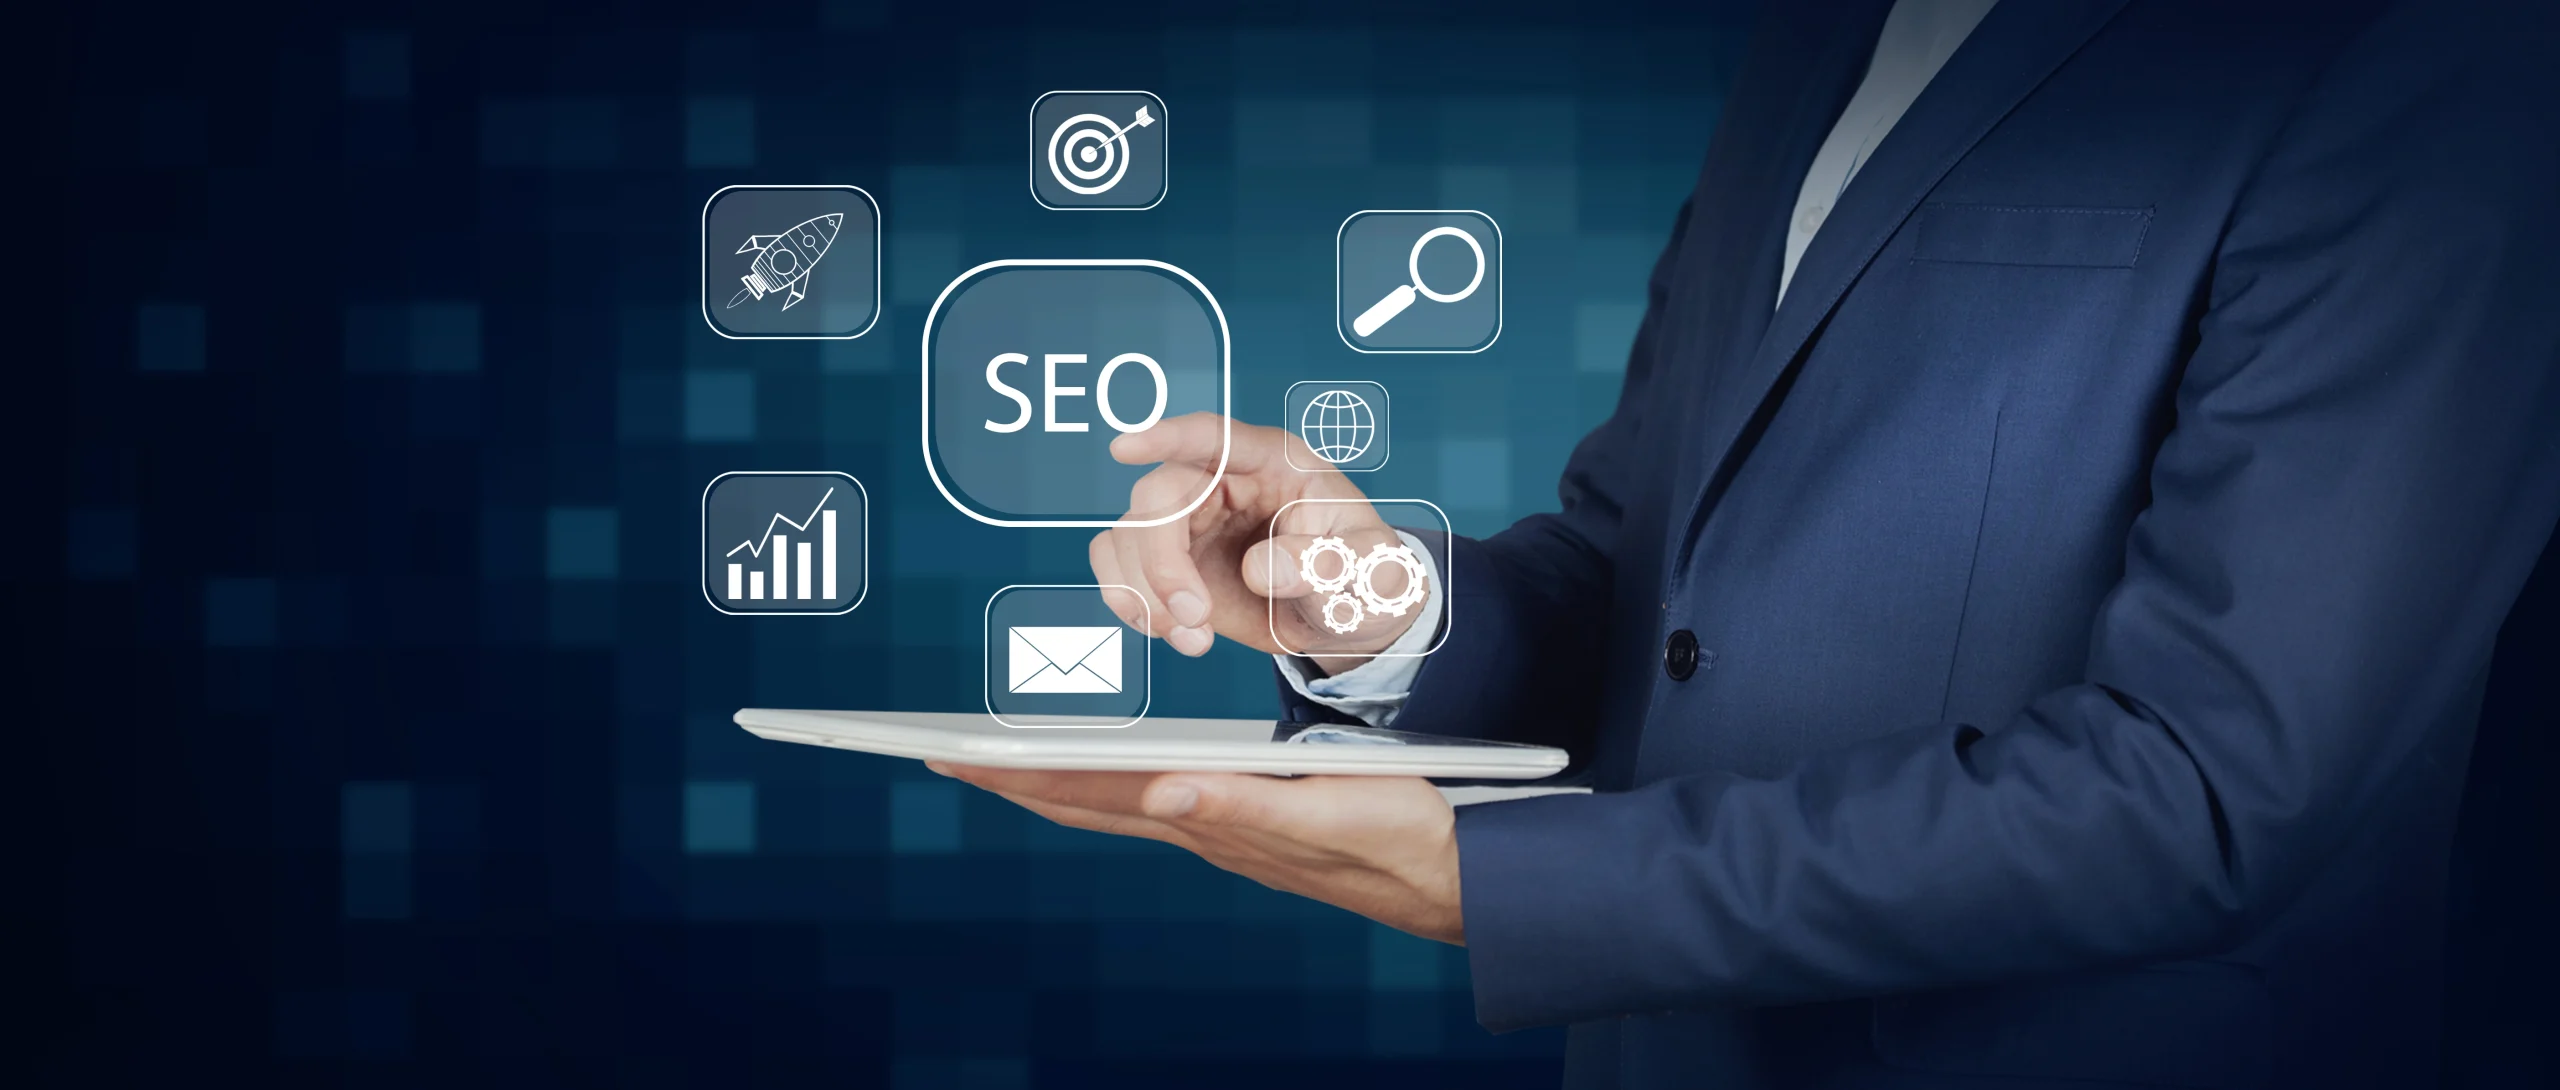 internet-marketing-web-analytics-seo-search-engine-optimization copy